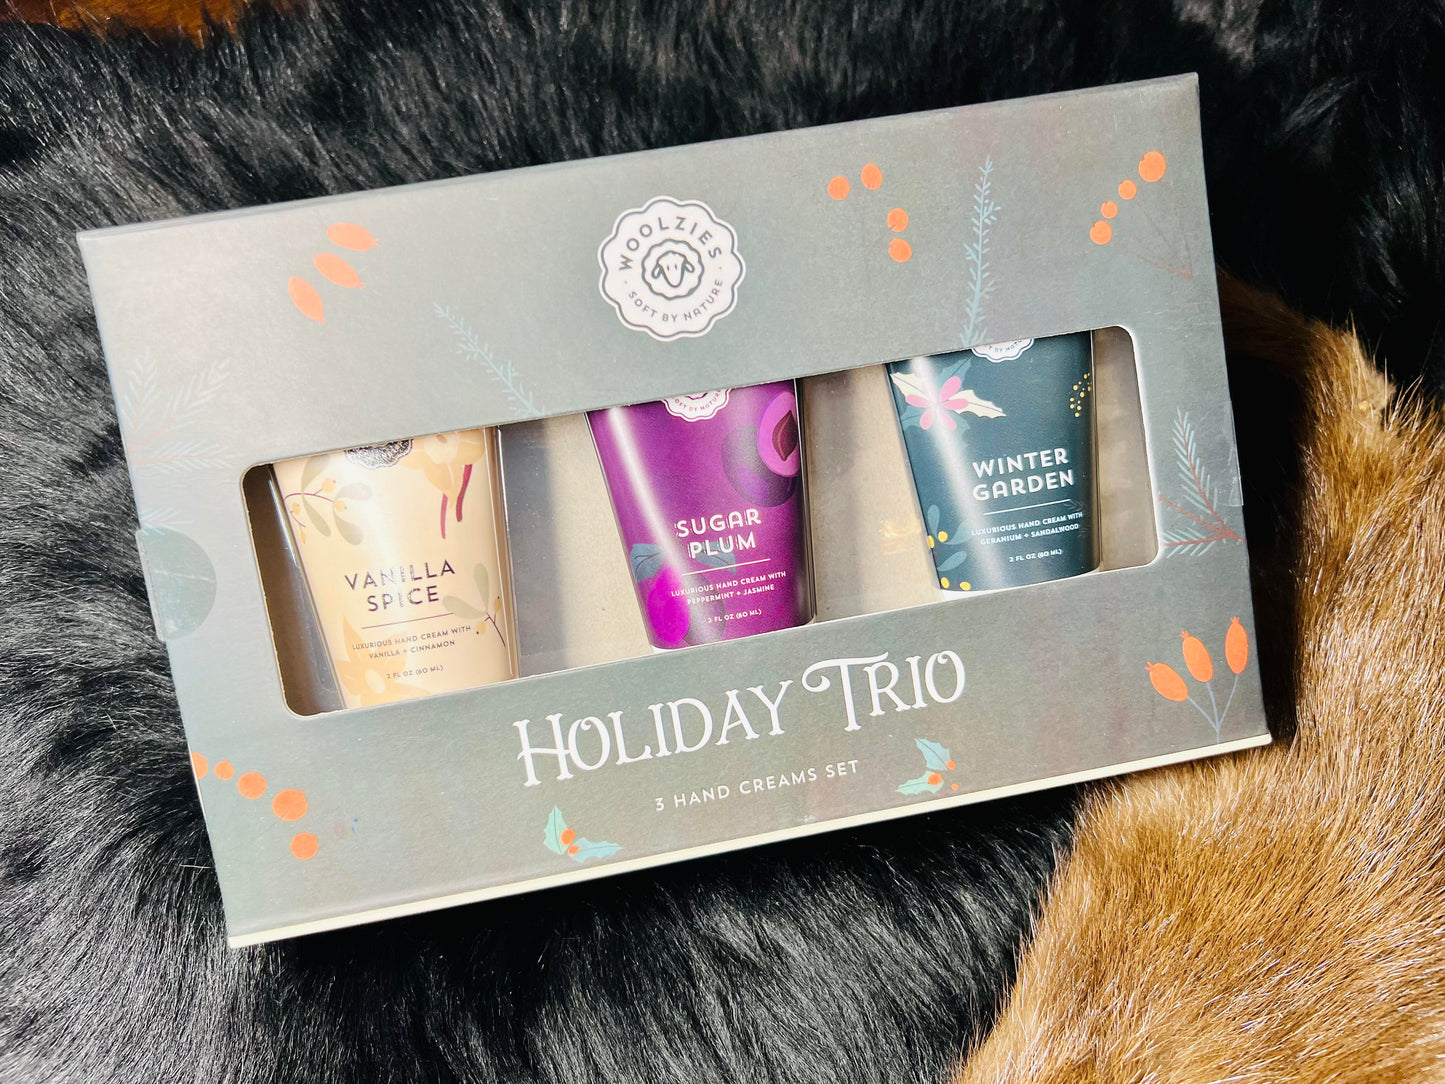 Holiday Trio Hand Cream Set